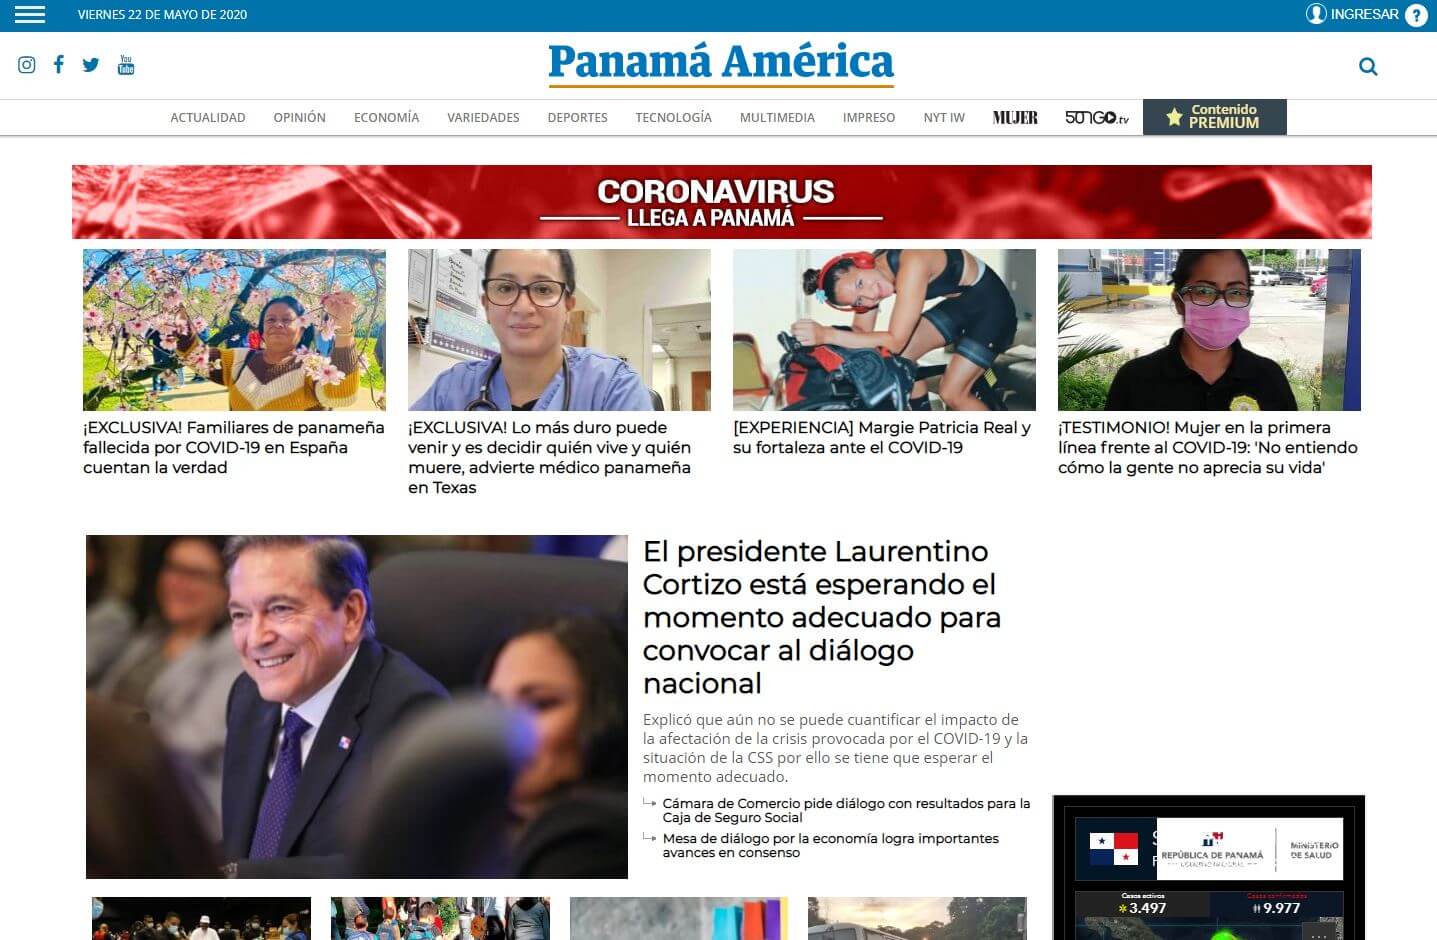 periodicos de panama 05 panama america website